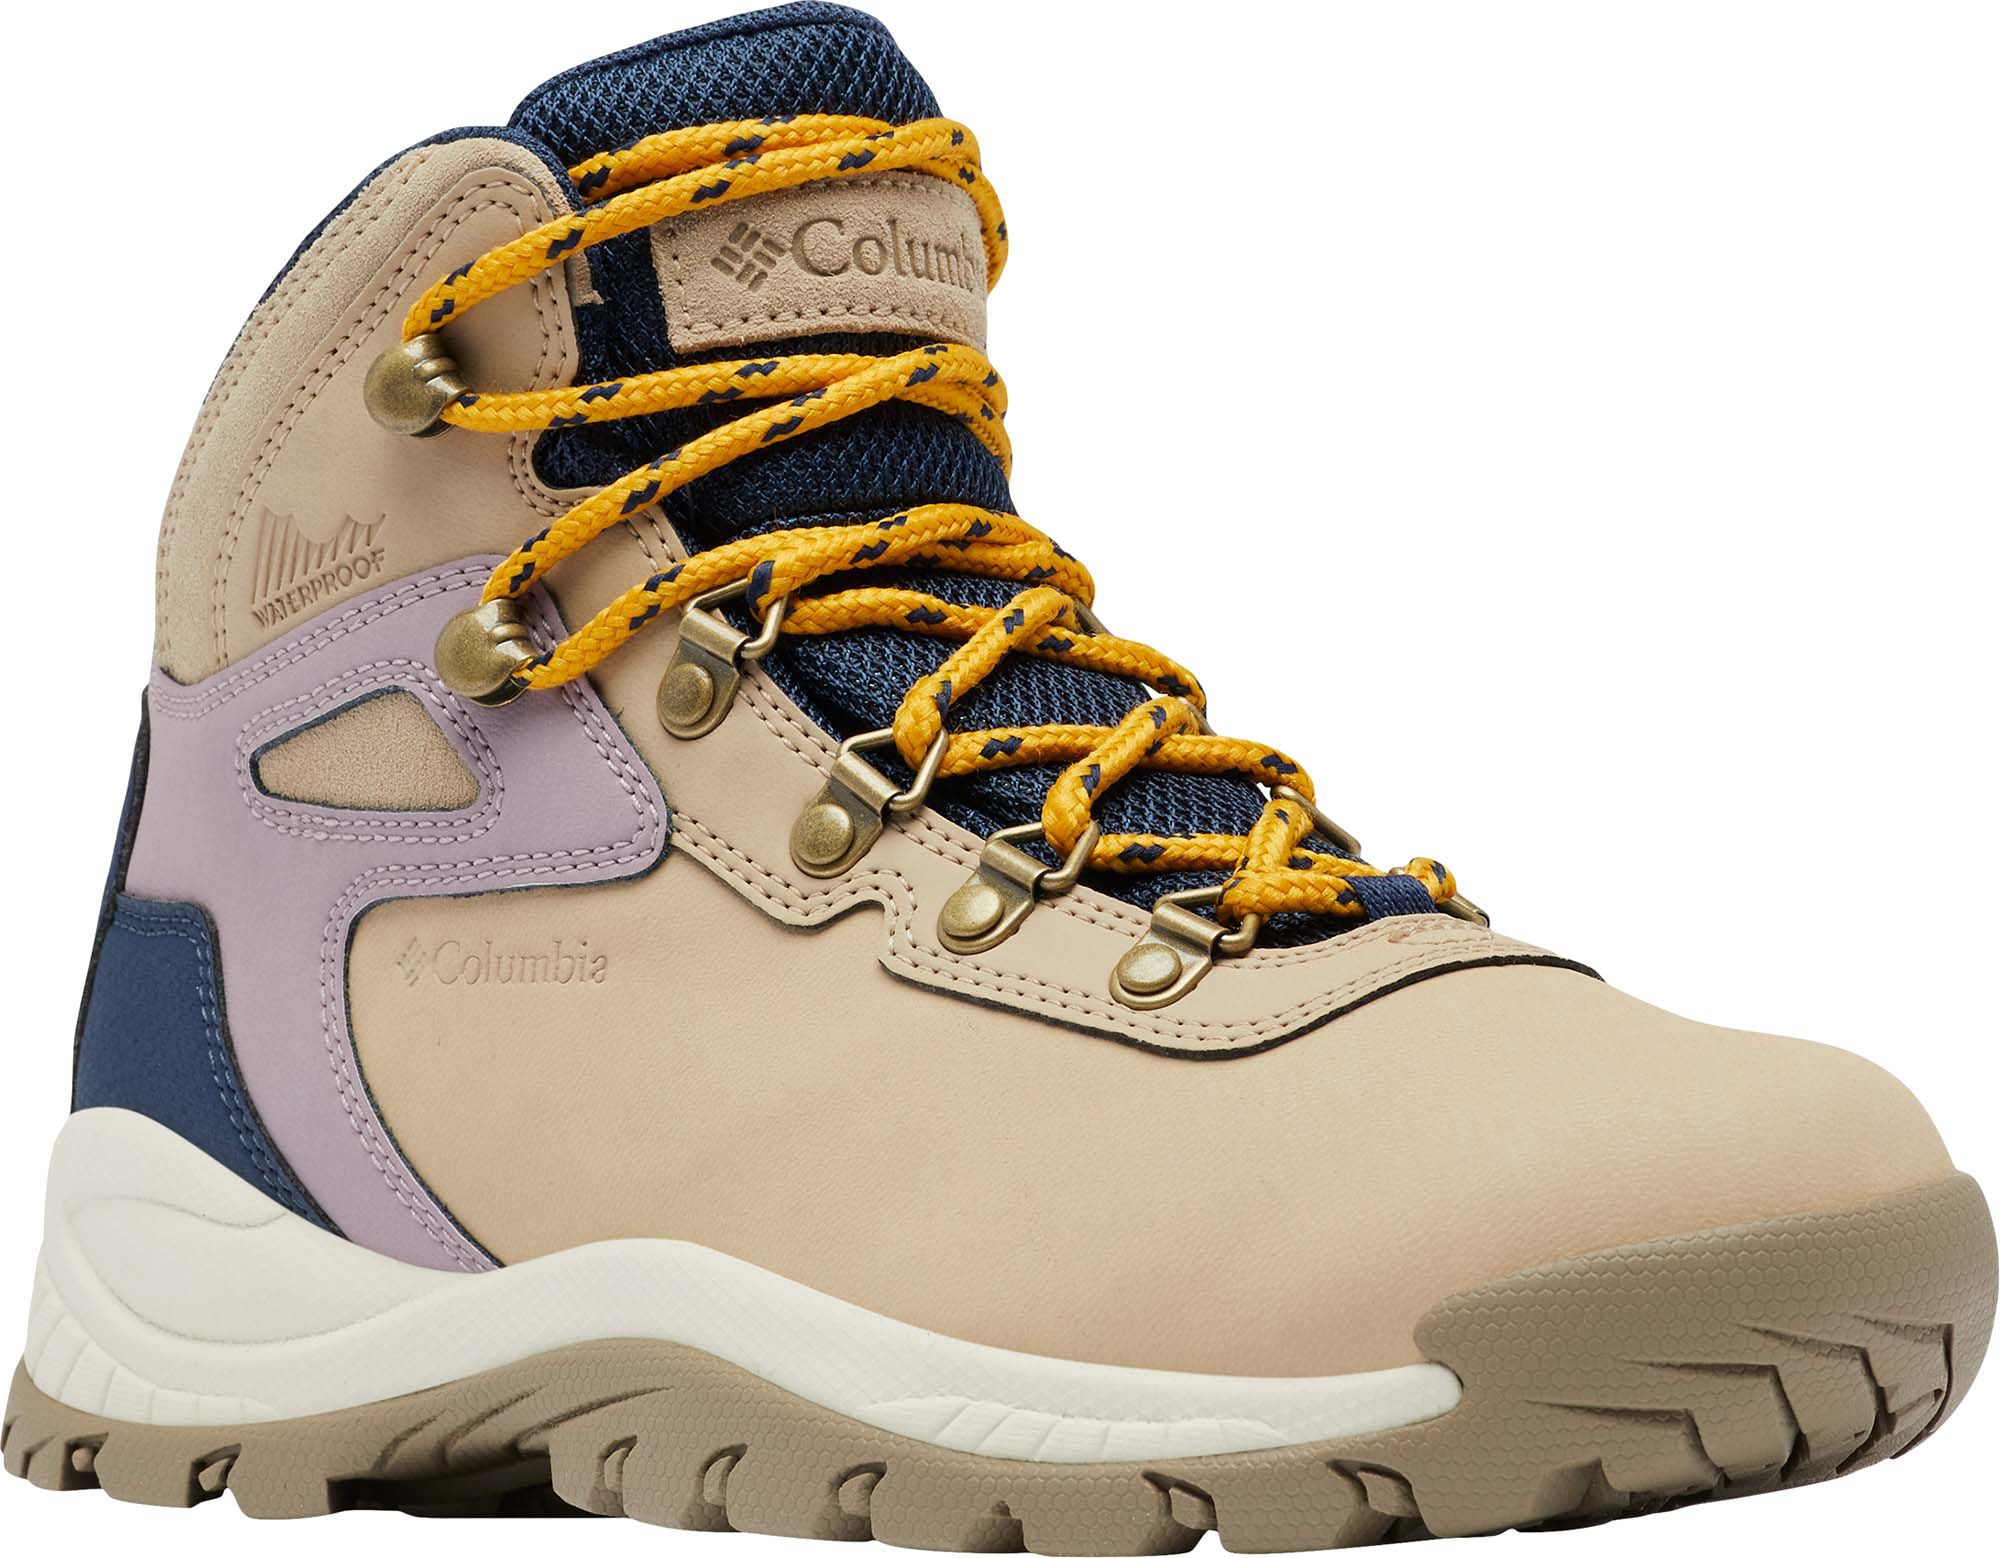 Photos - Trekking Shoes Columbia Women's Newton Ridge Plus Mid Waterproof Hiking Boots, Size 10, A 